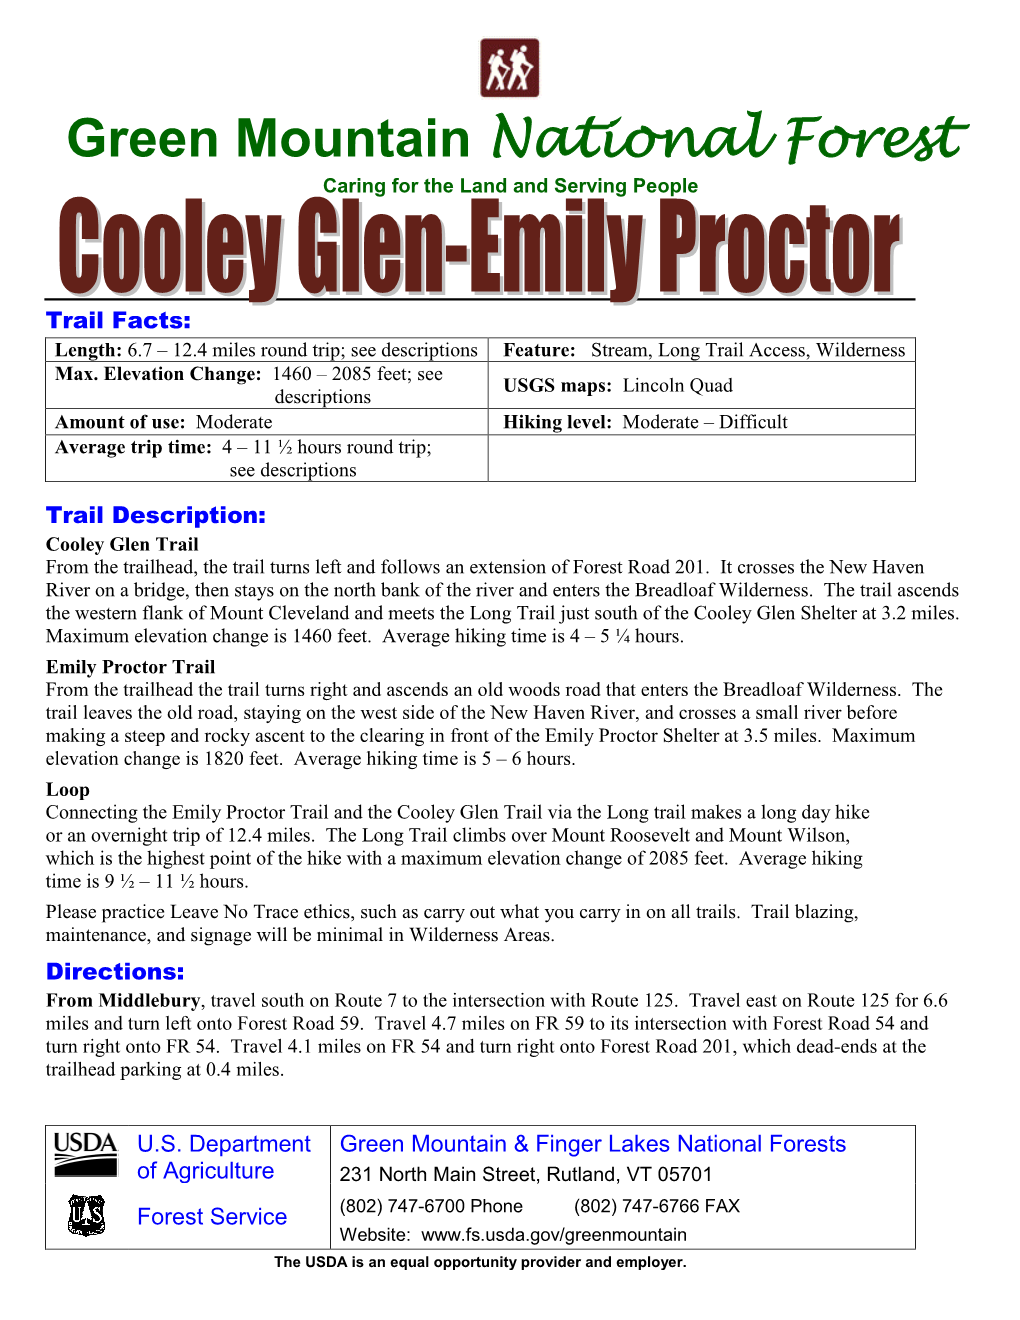 Cooley Glen-Emily Proctor